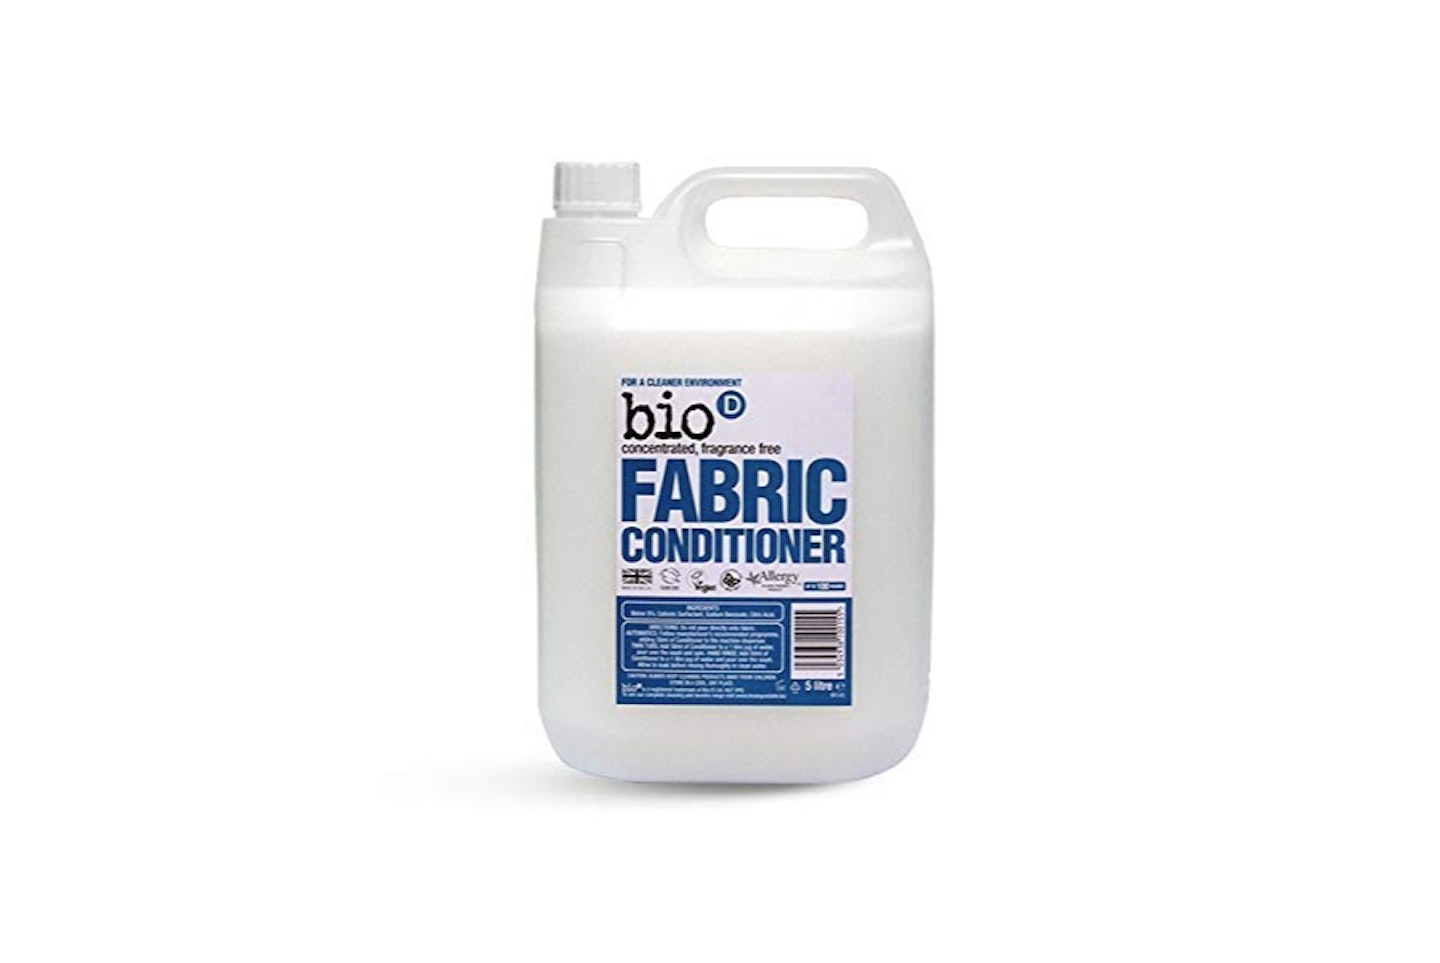 Bio-D Fabric Conditioner 5L